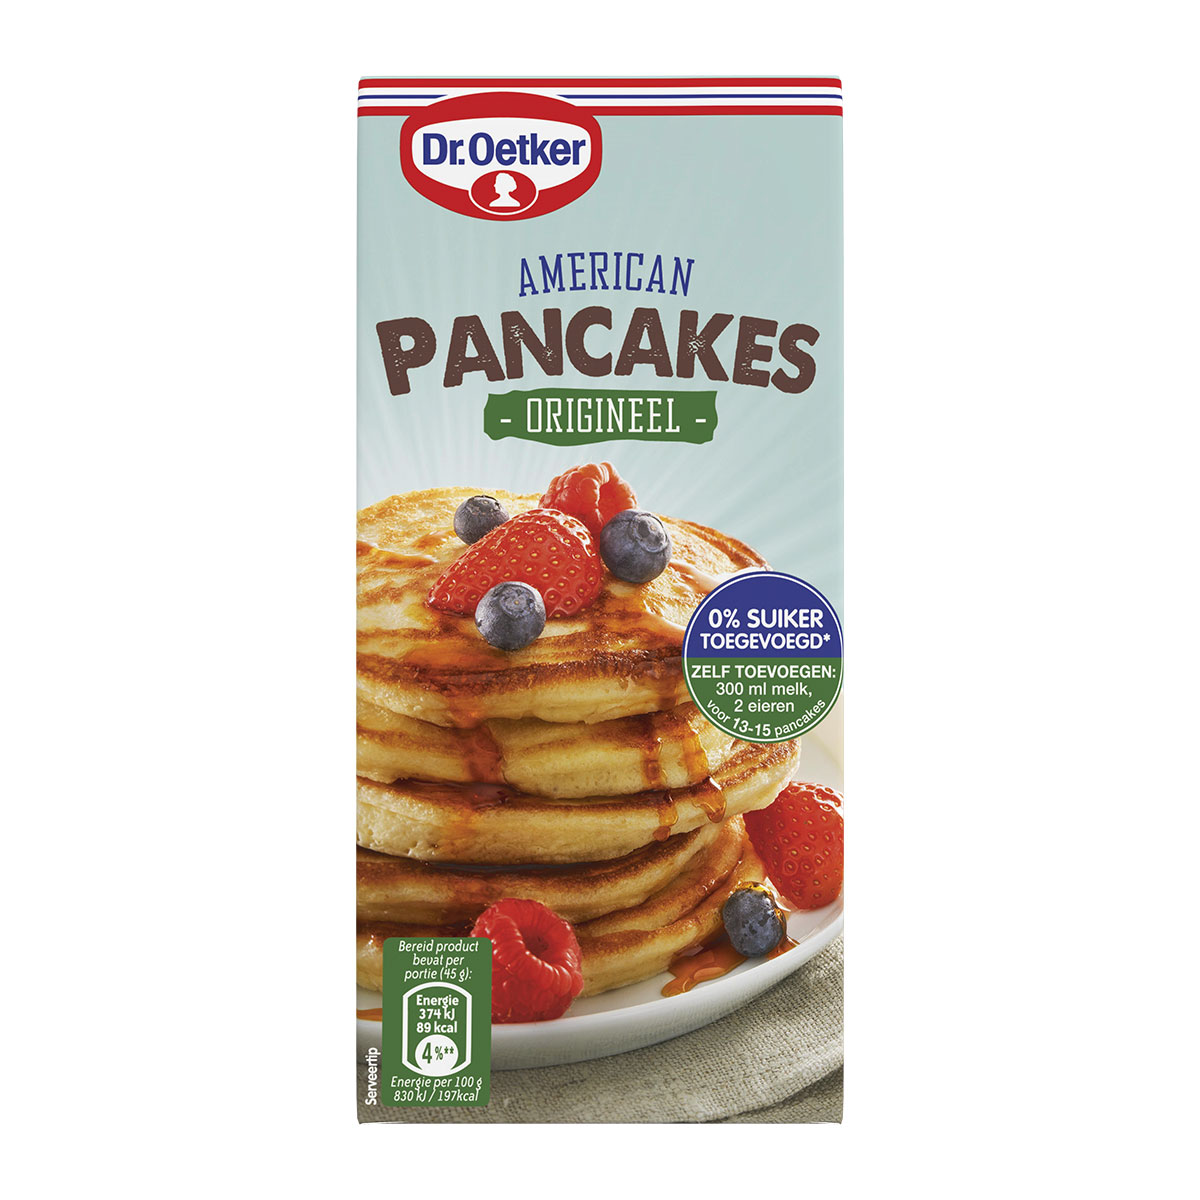 Share 50 kuva dr oetker american pancakes